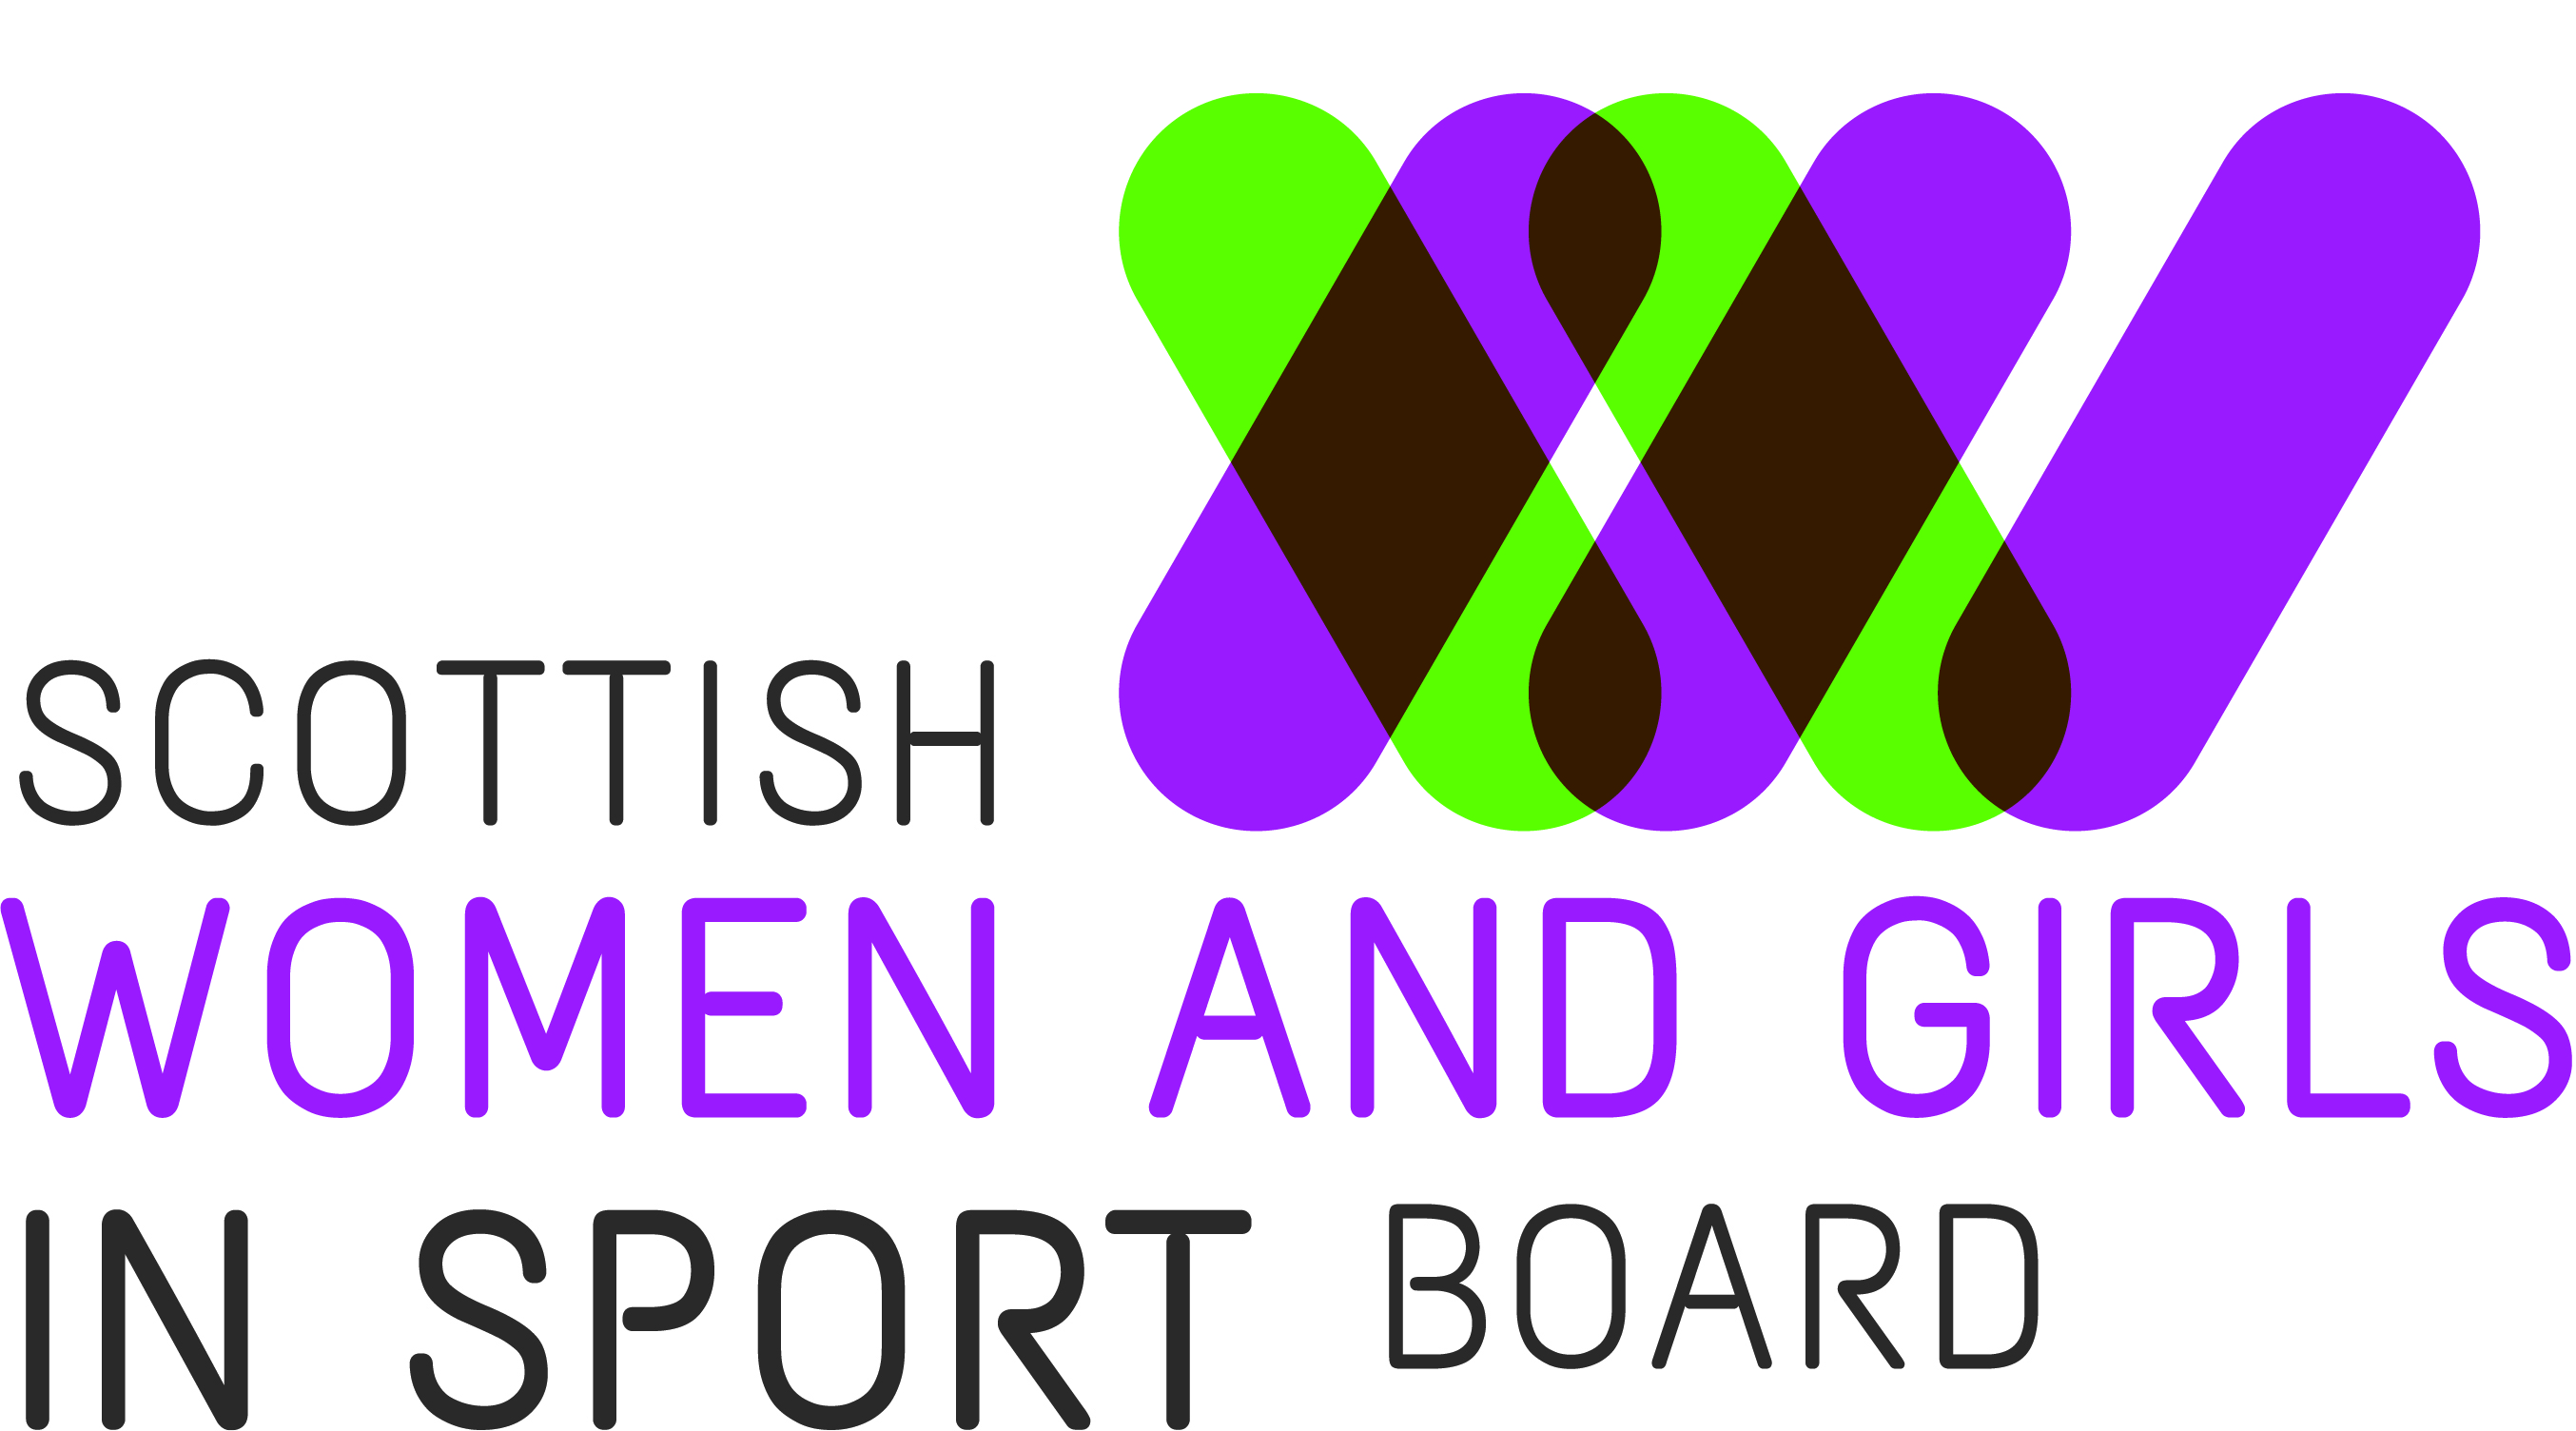 Scottish Women and Girls in Sport Week - get involved! - Scottish